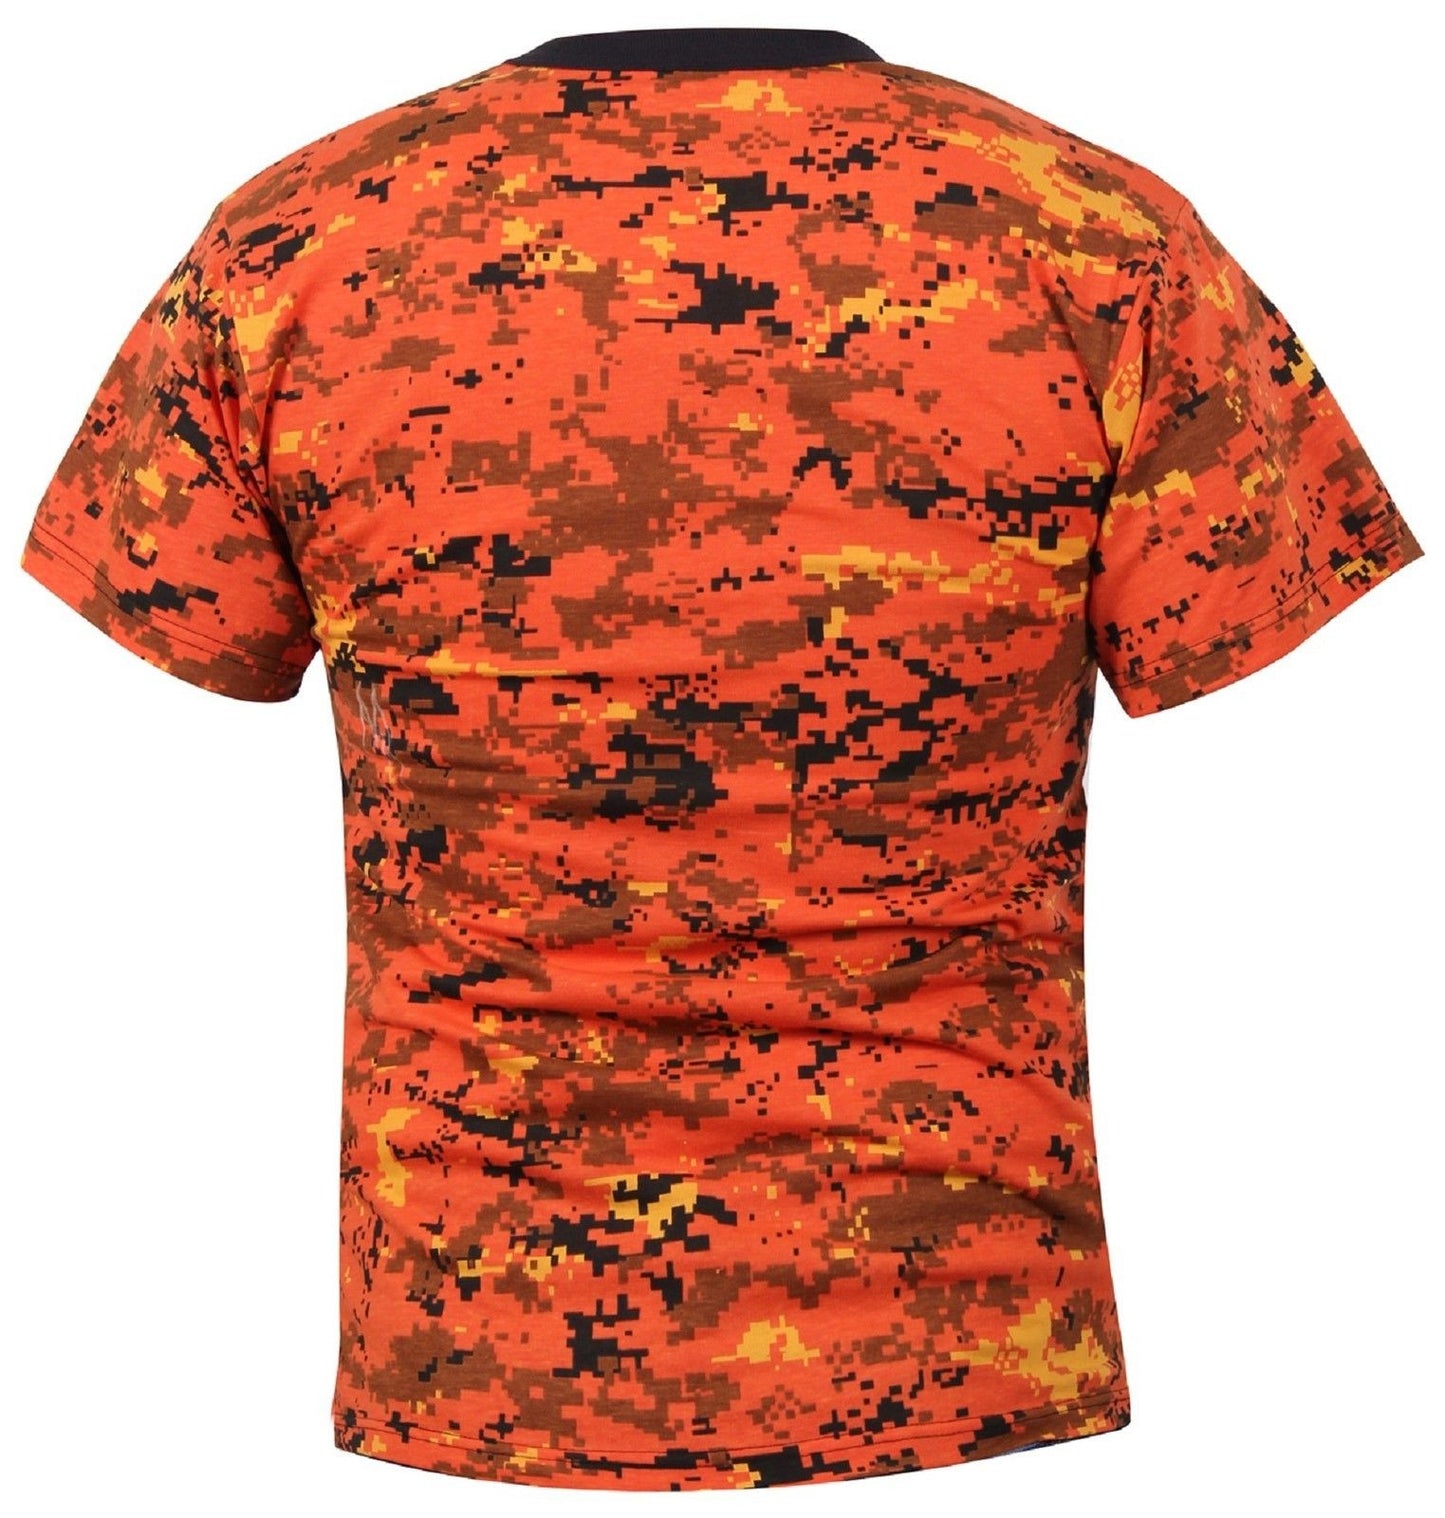 Orange & Black Digital Camouflage T-Shirt - Rothco Soft Cotton Digi Camo Tee